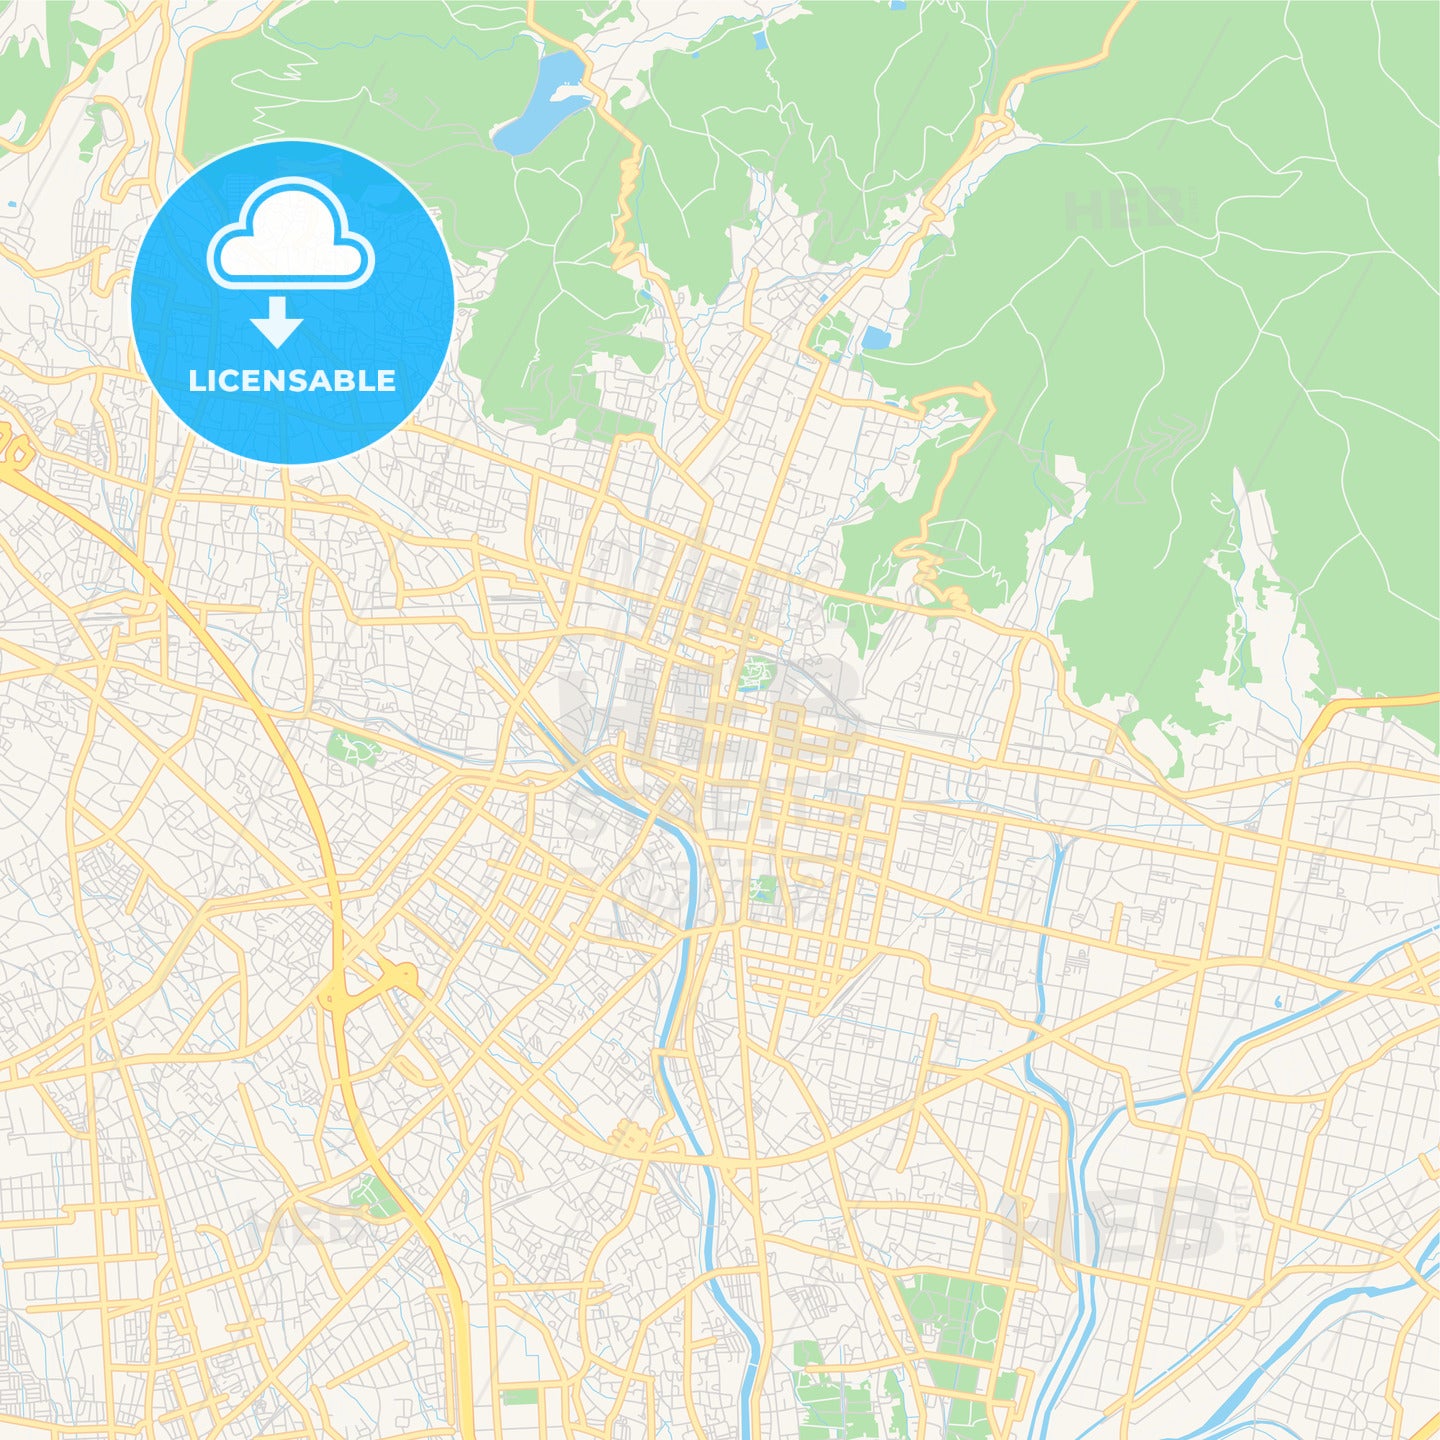 Printable street map of Kōfu, Japan